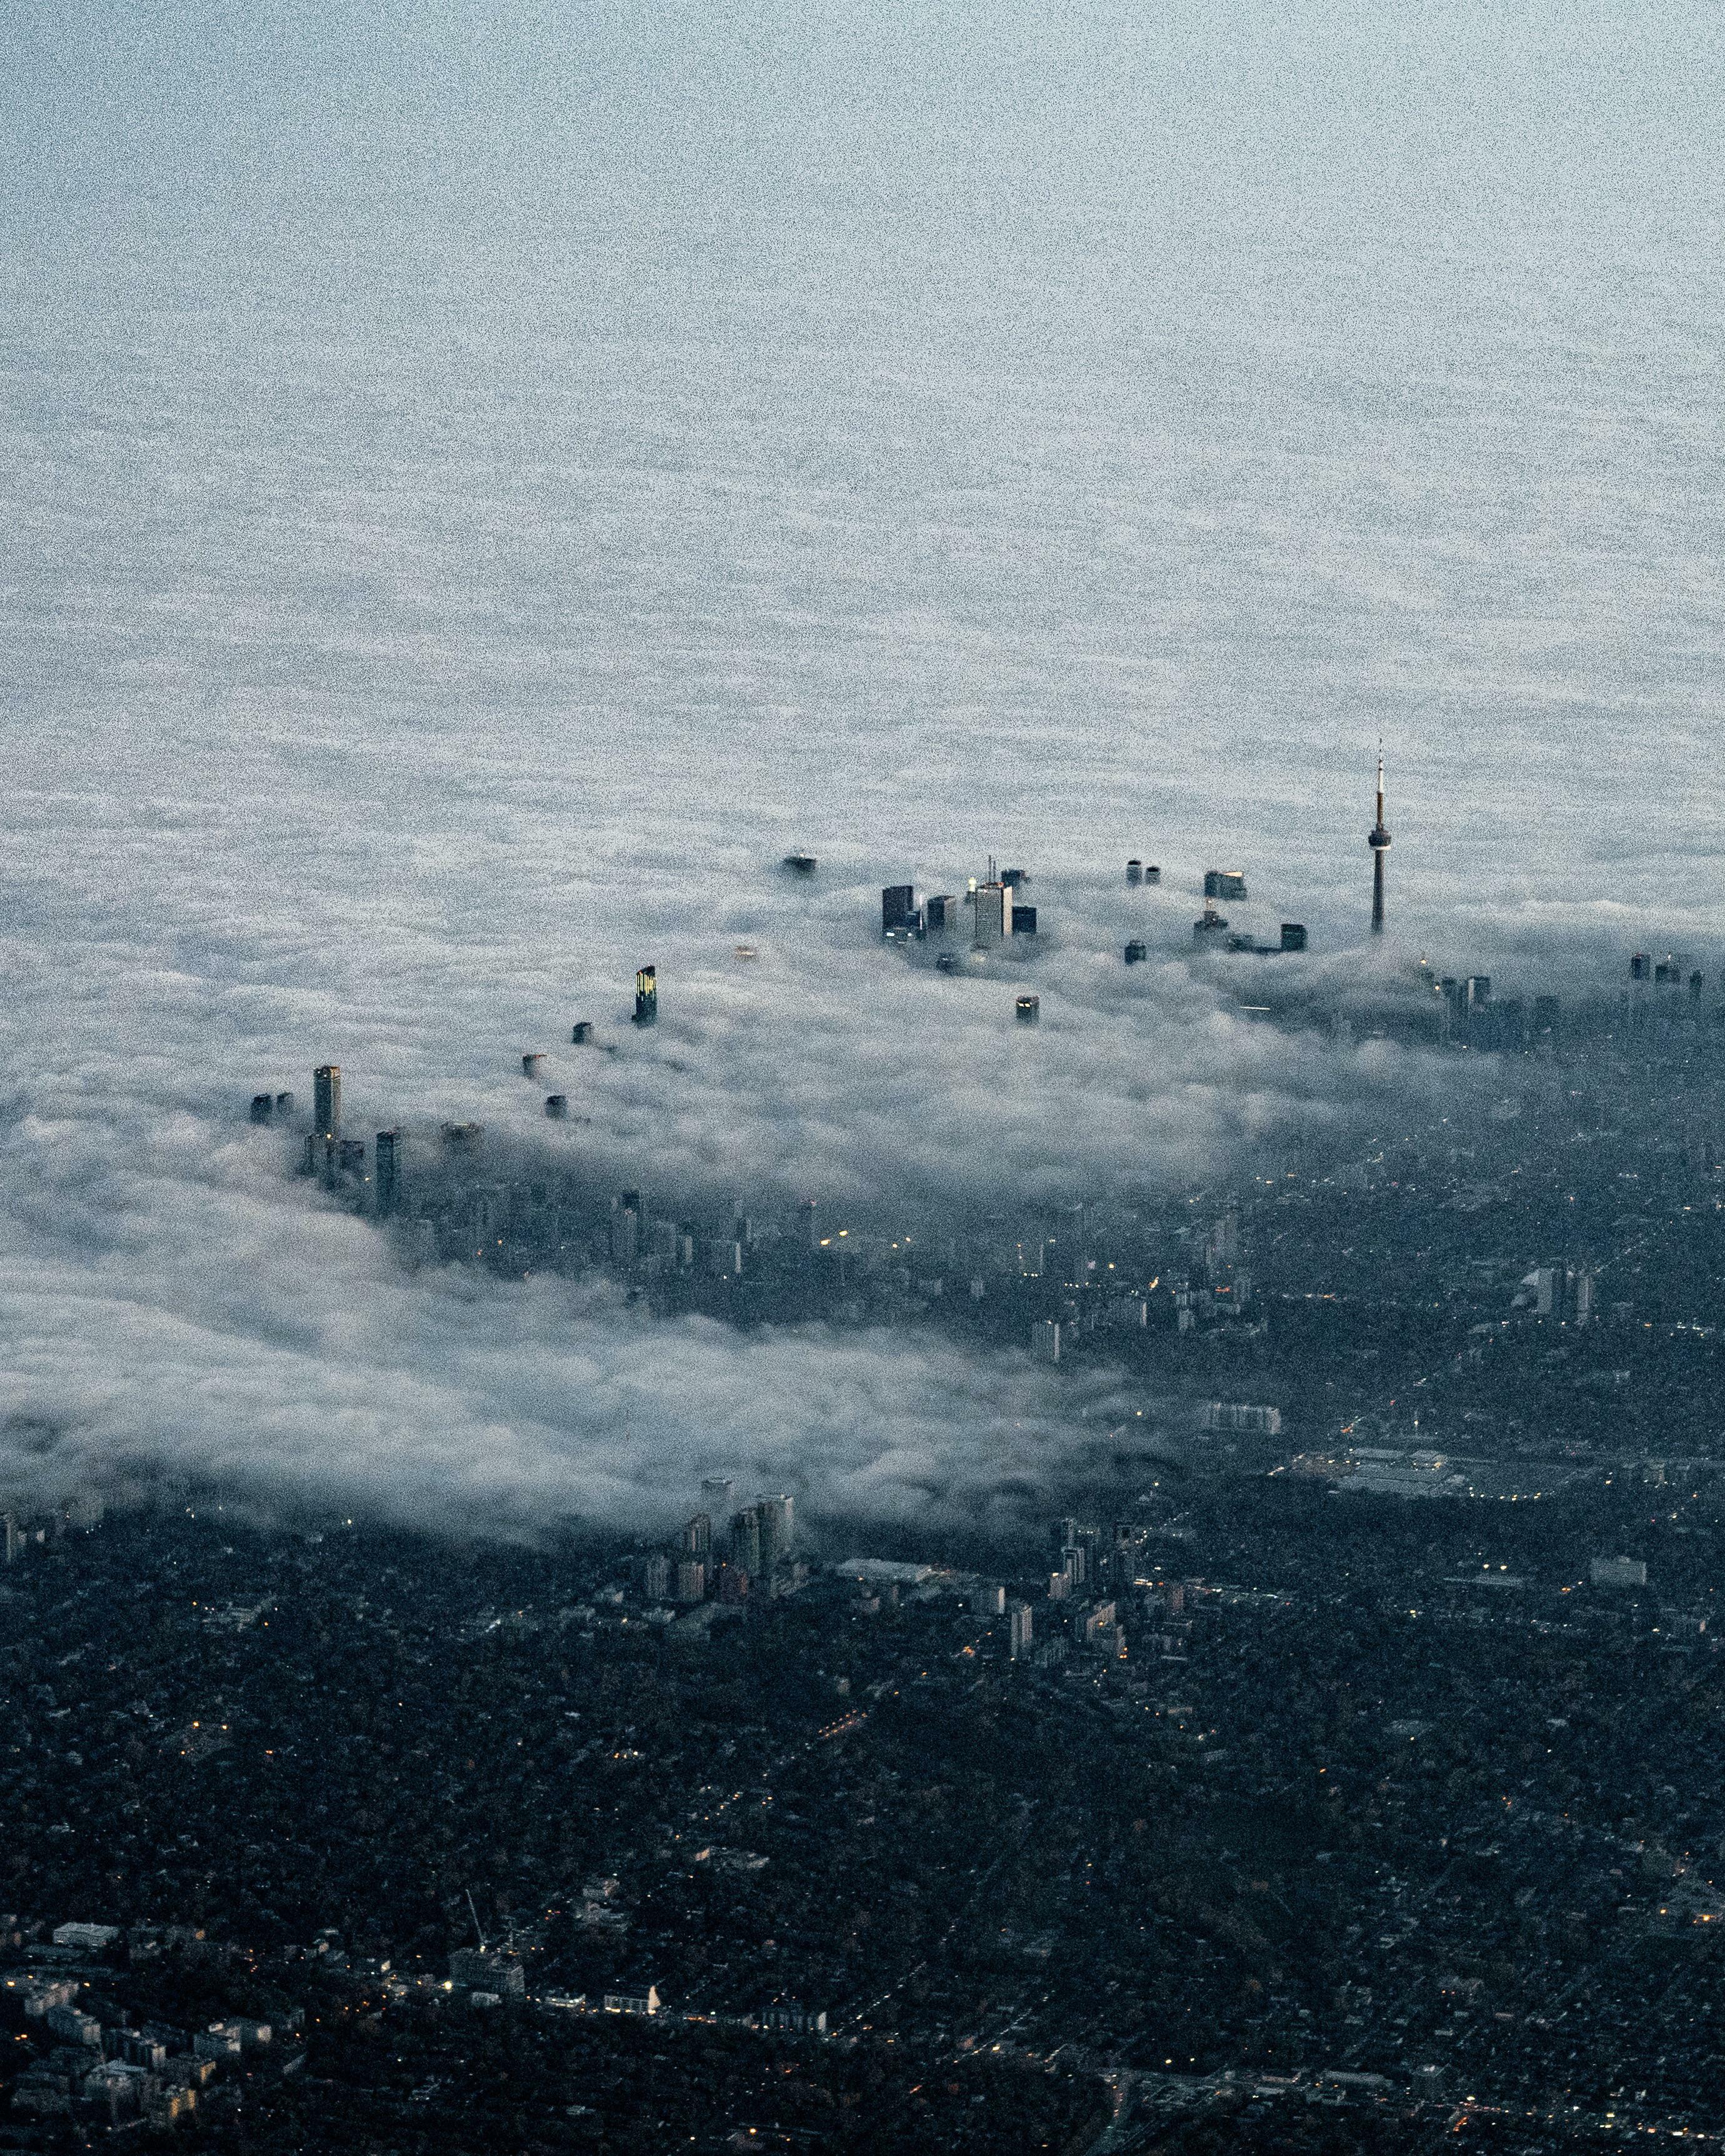 Itap de brouillard au-dessus de Toronto